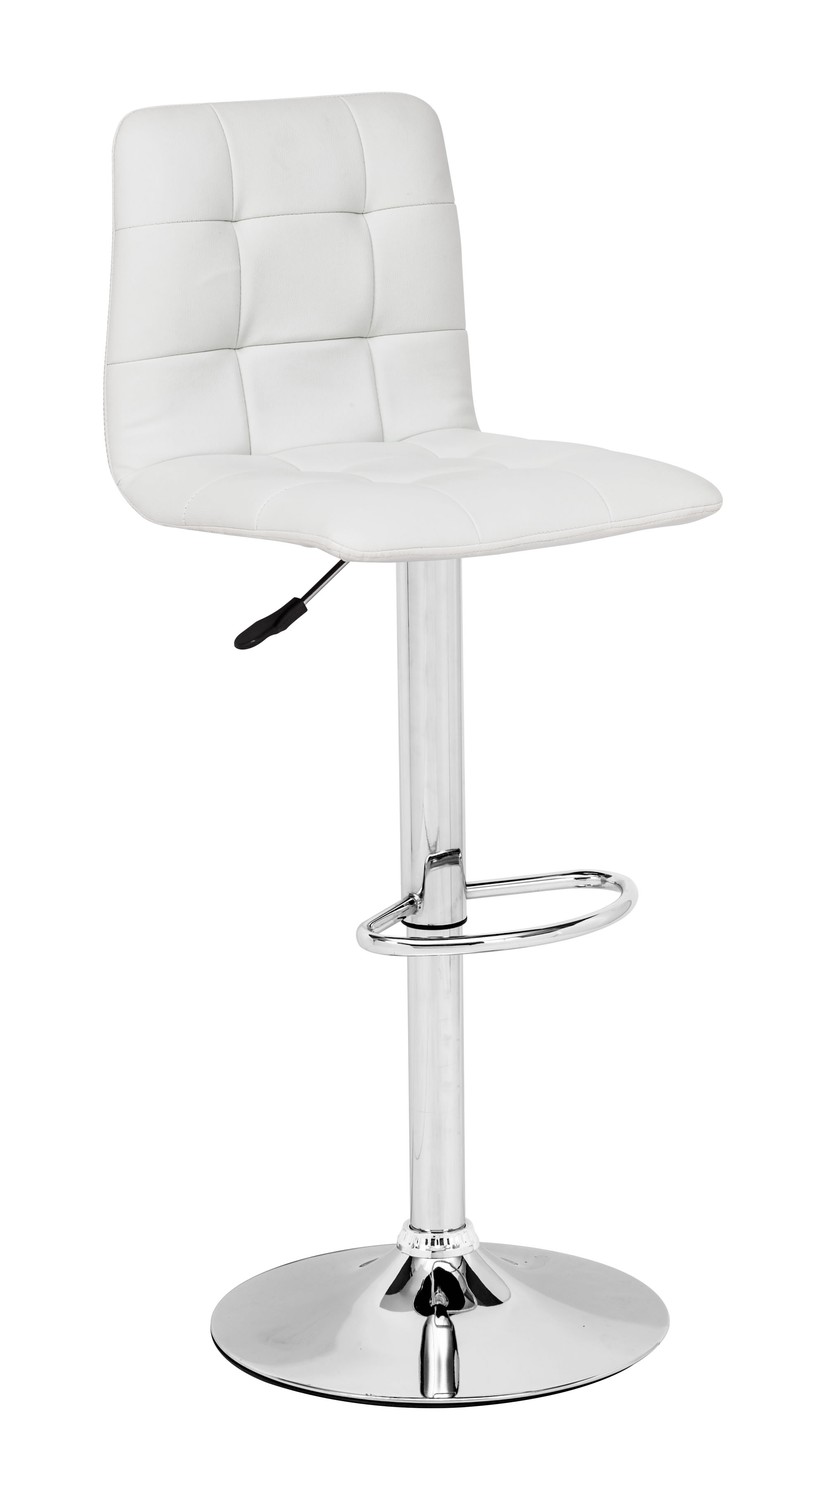 16.9" x 16.3" x 36.6" White, Leatherette, Chromed Steel, Bar Chair